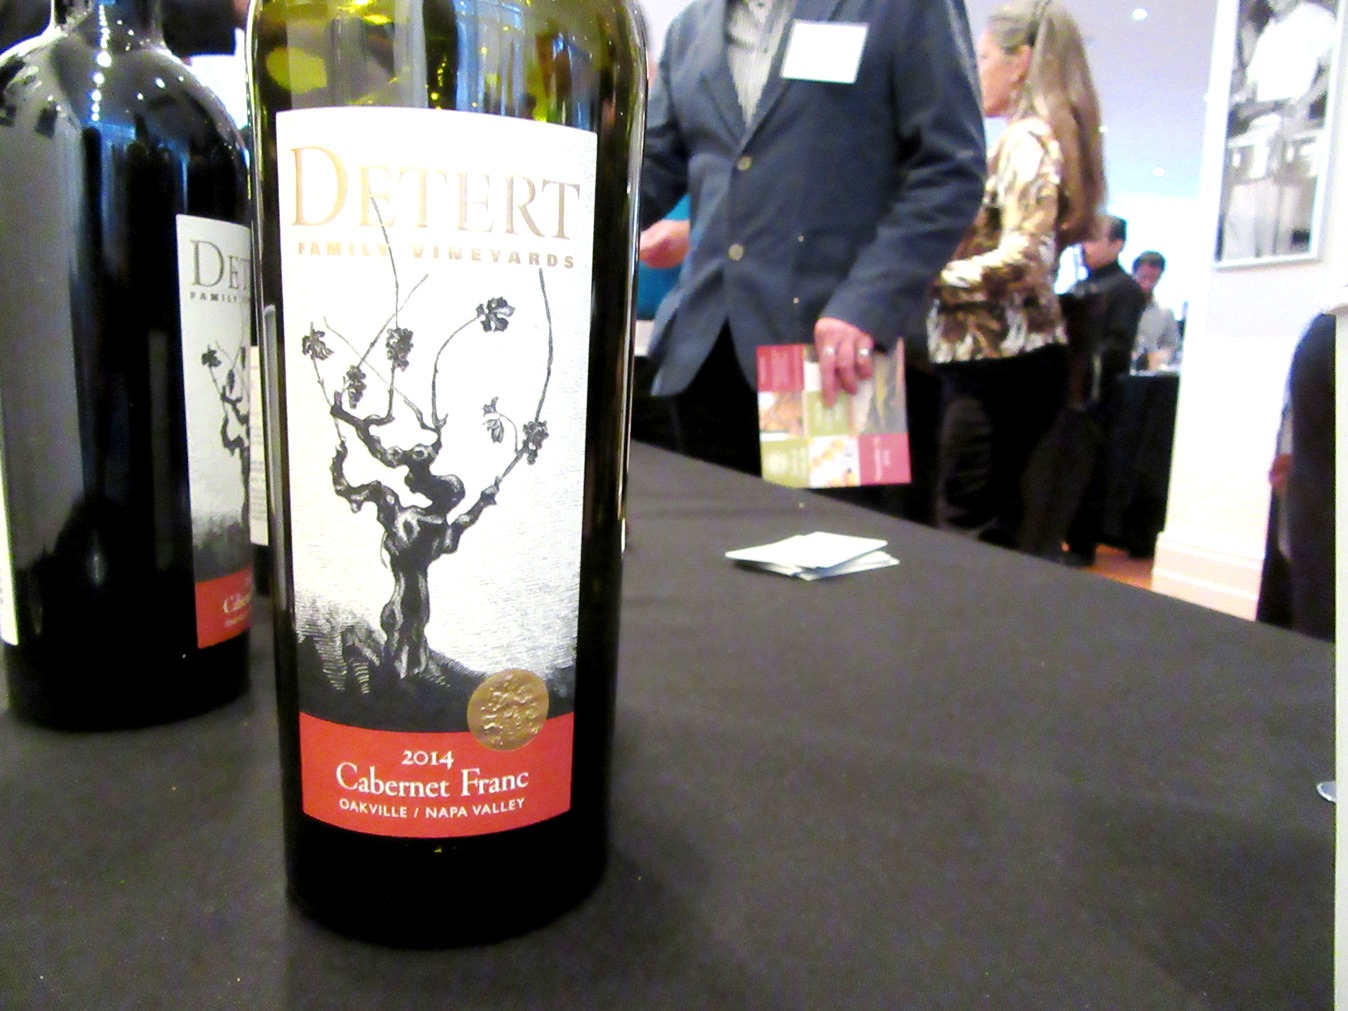 Detert Family Vineyards, Cabernet Franc 2014, Oakville, Napa Valley, California, Wine Casual